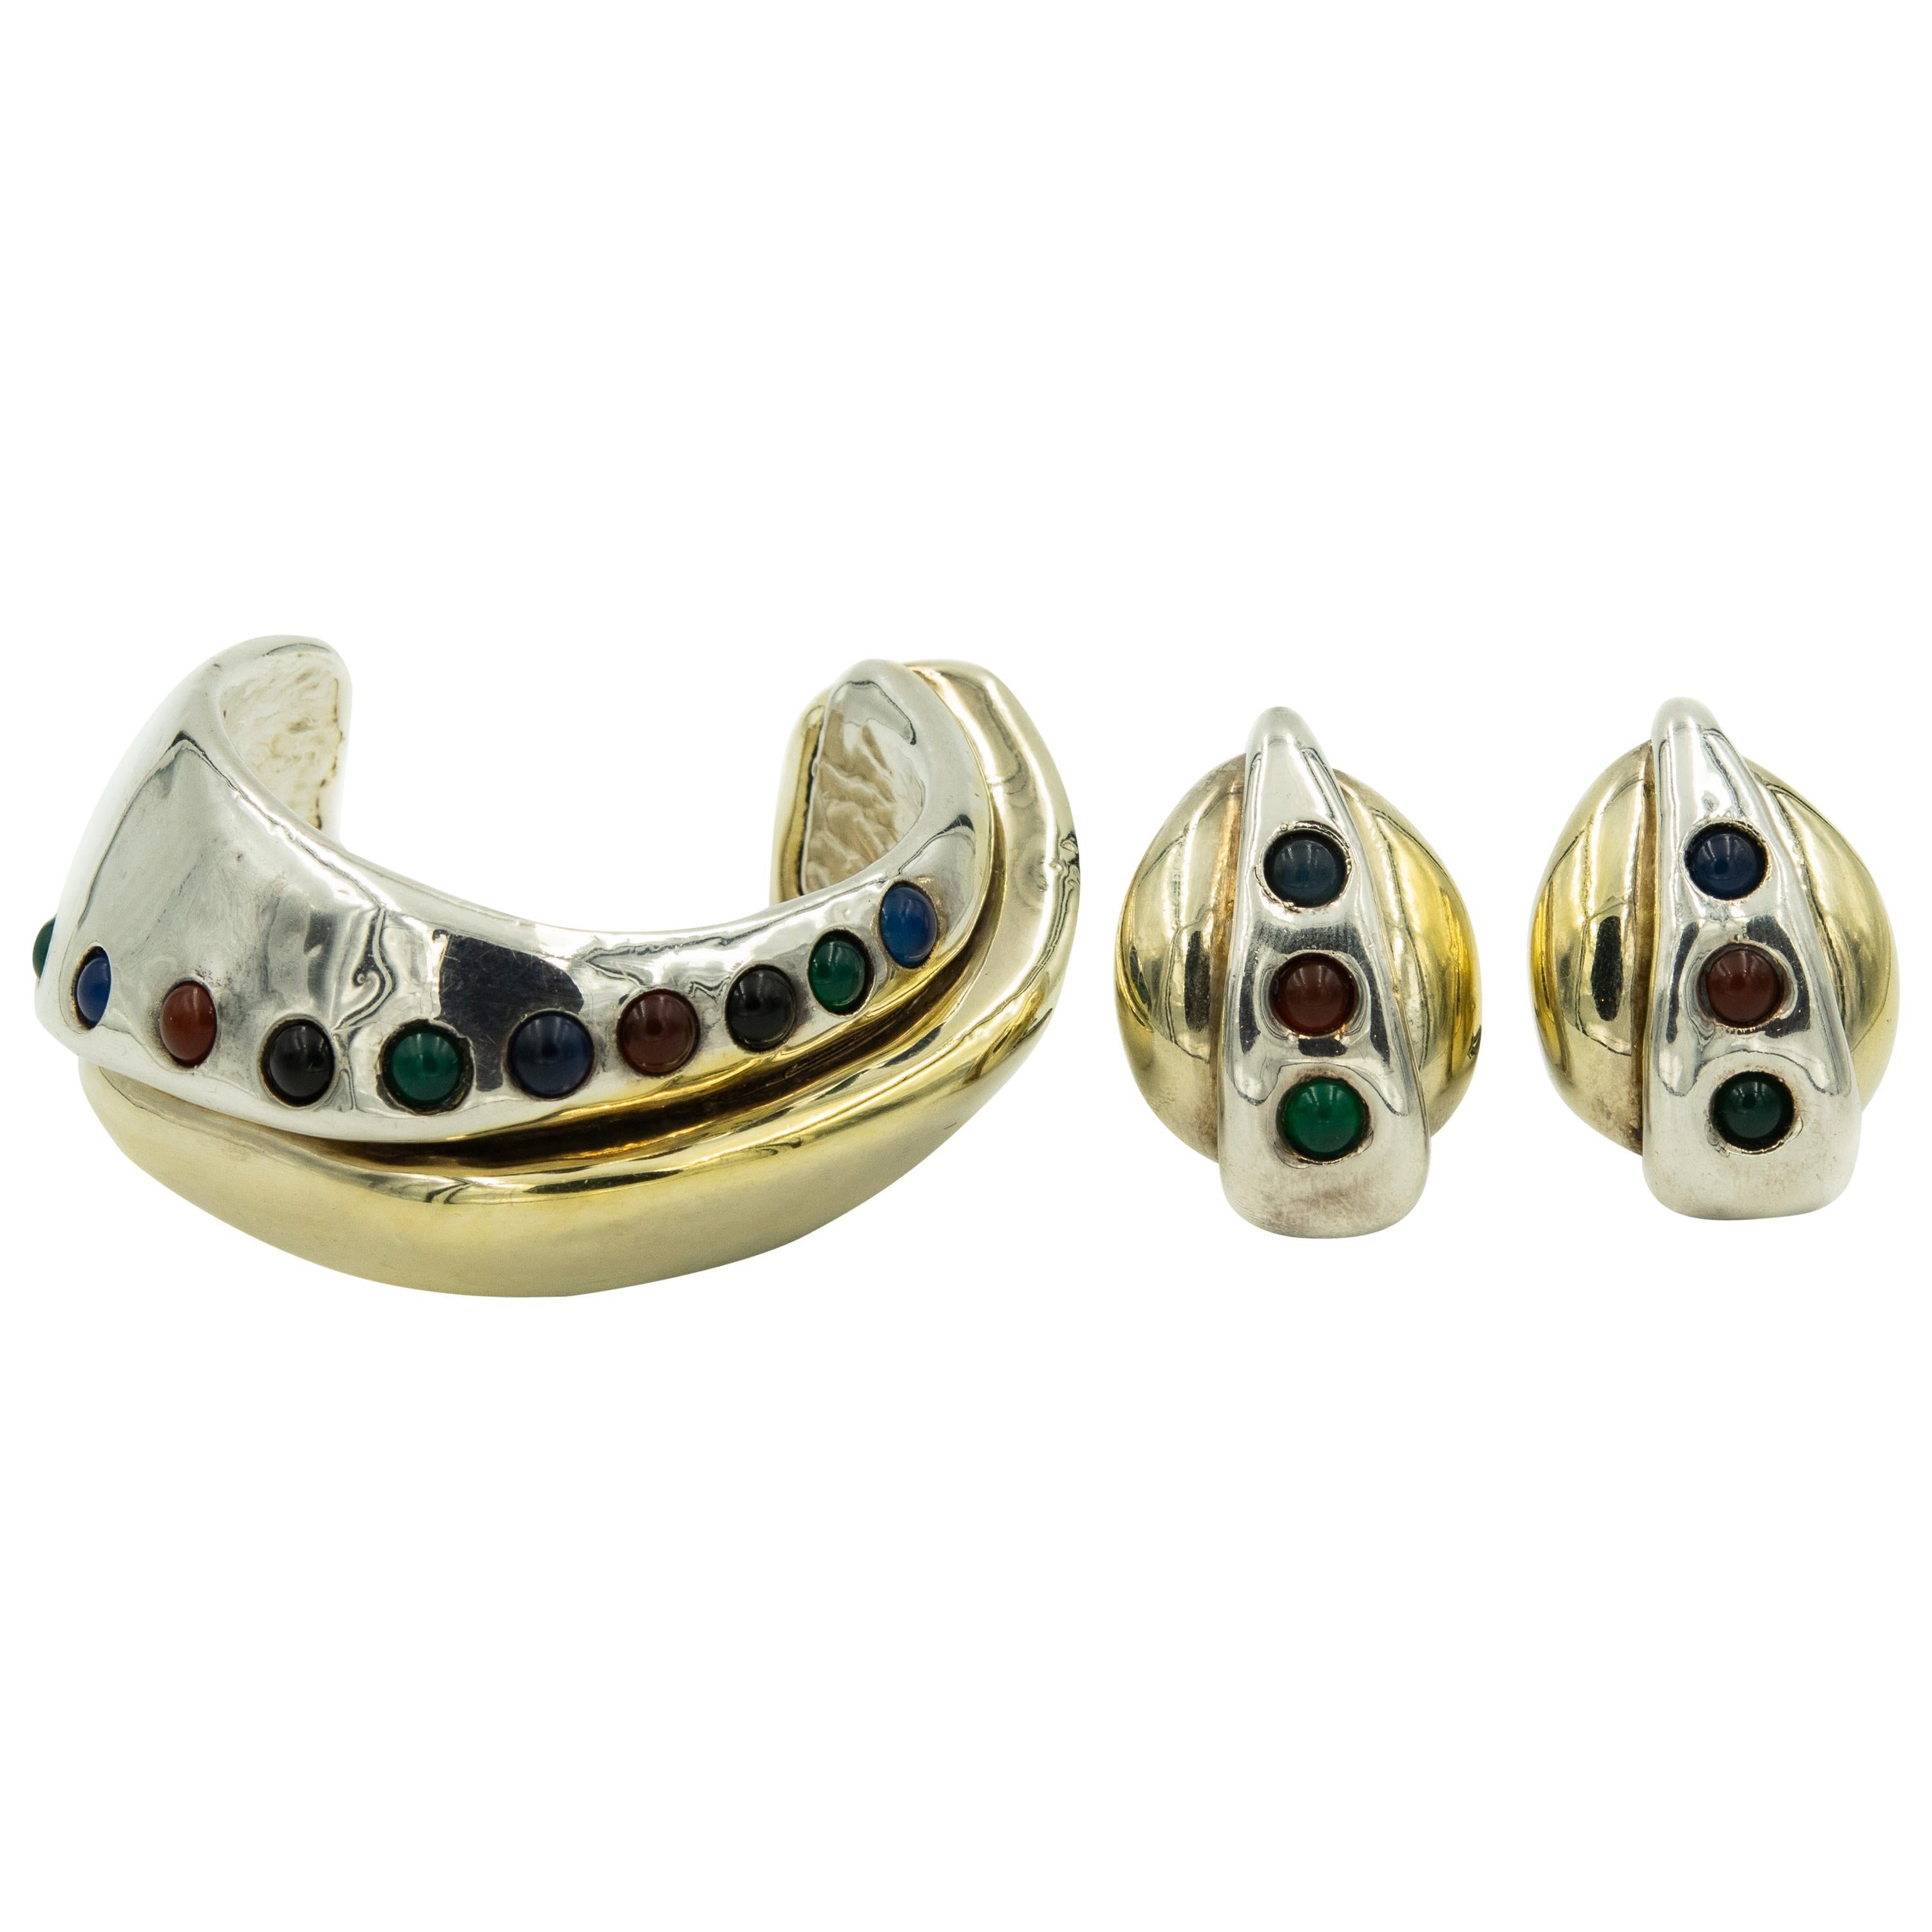 Sam Philipe Sterling Silver Gold Vermeil Modernist Cuff Bracelet Earrings Set